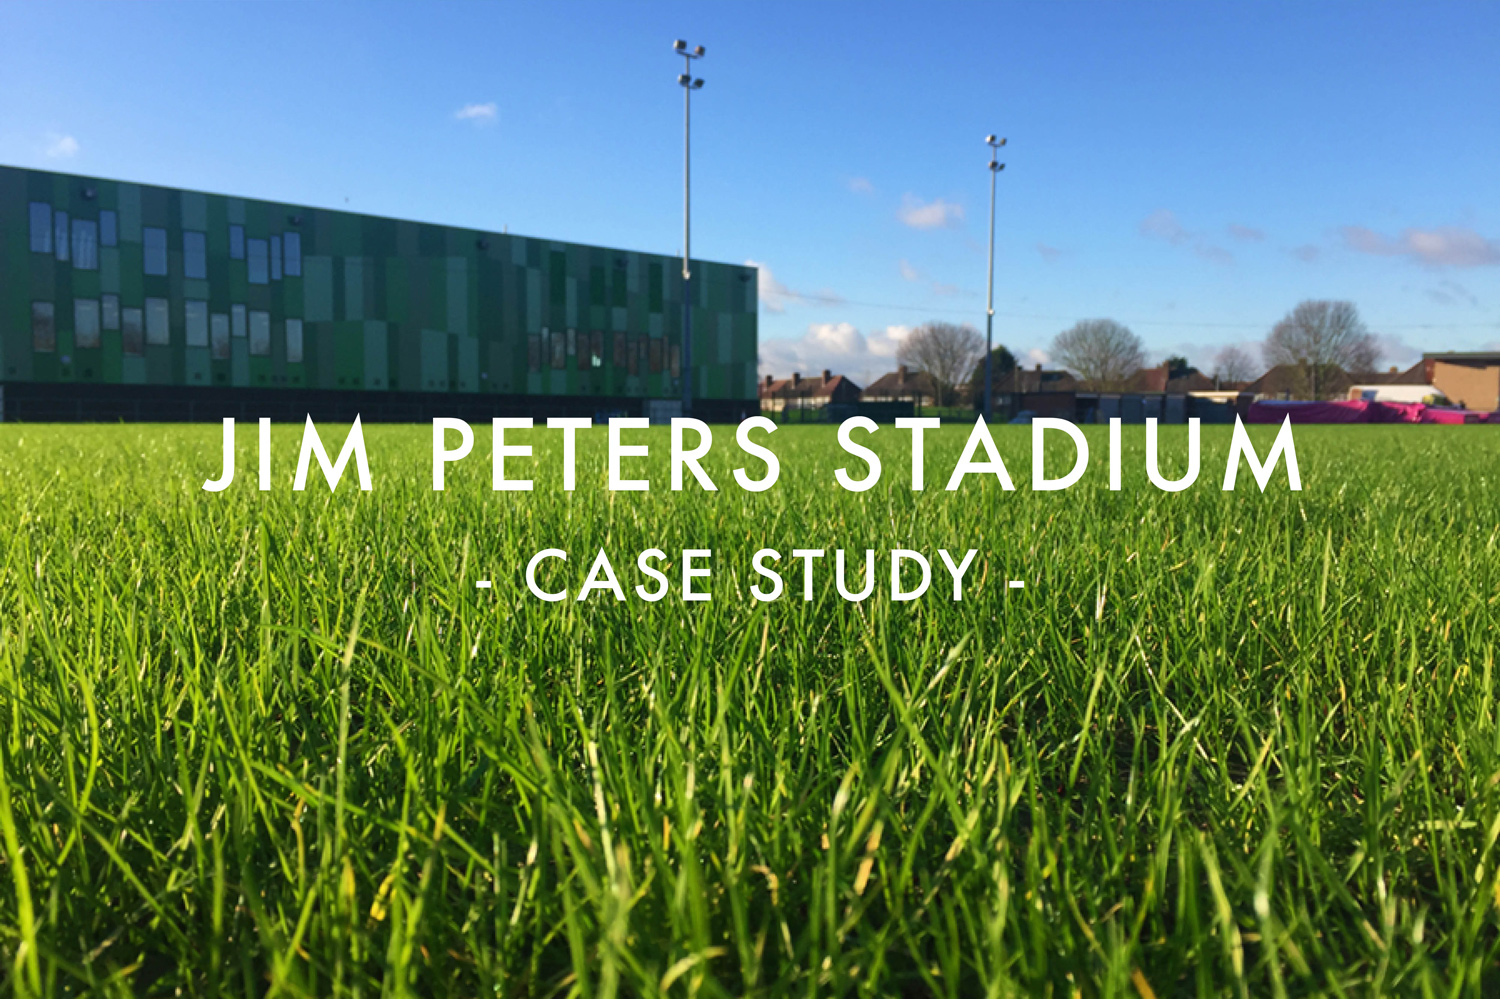 Jim Peters Stadium - Case Study